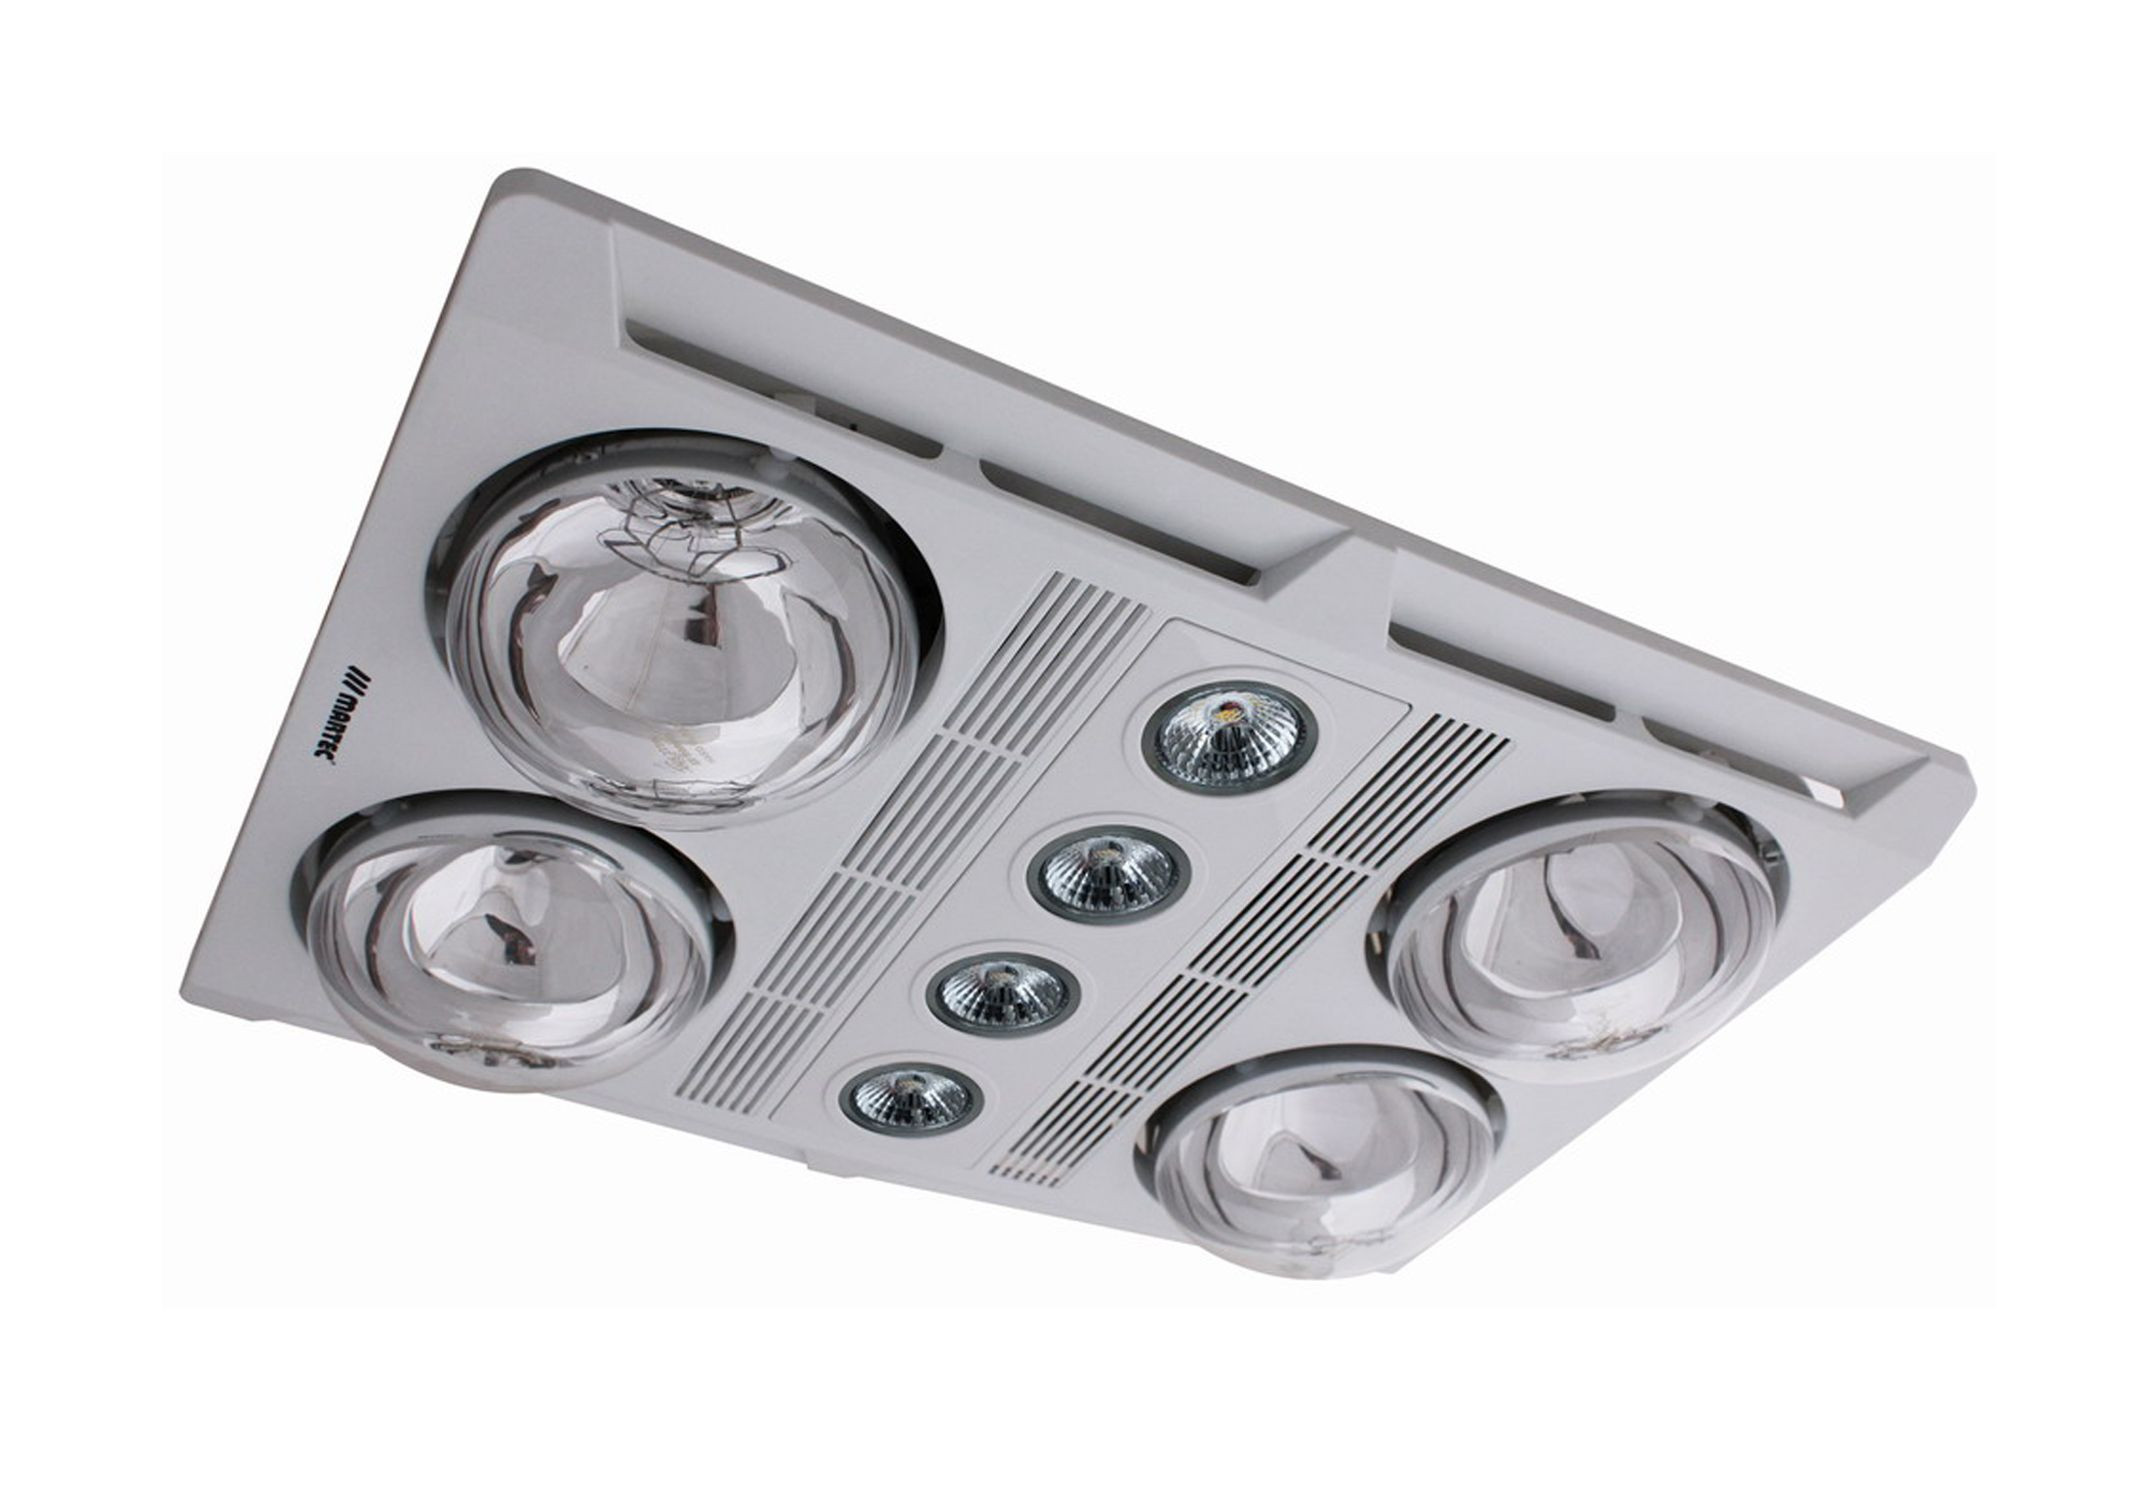 Bathroom Ceiling Light With Heater
 Profile Plus 4 3 in 1 Bathroom Heater w Exhaust Fan & 4